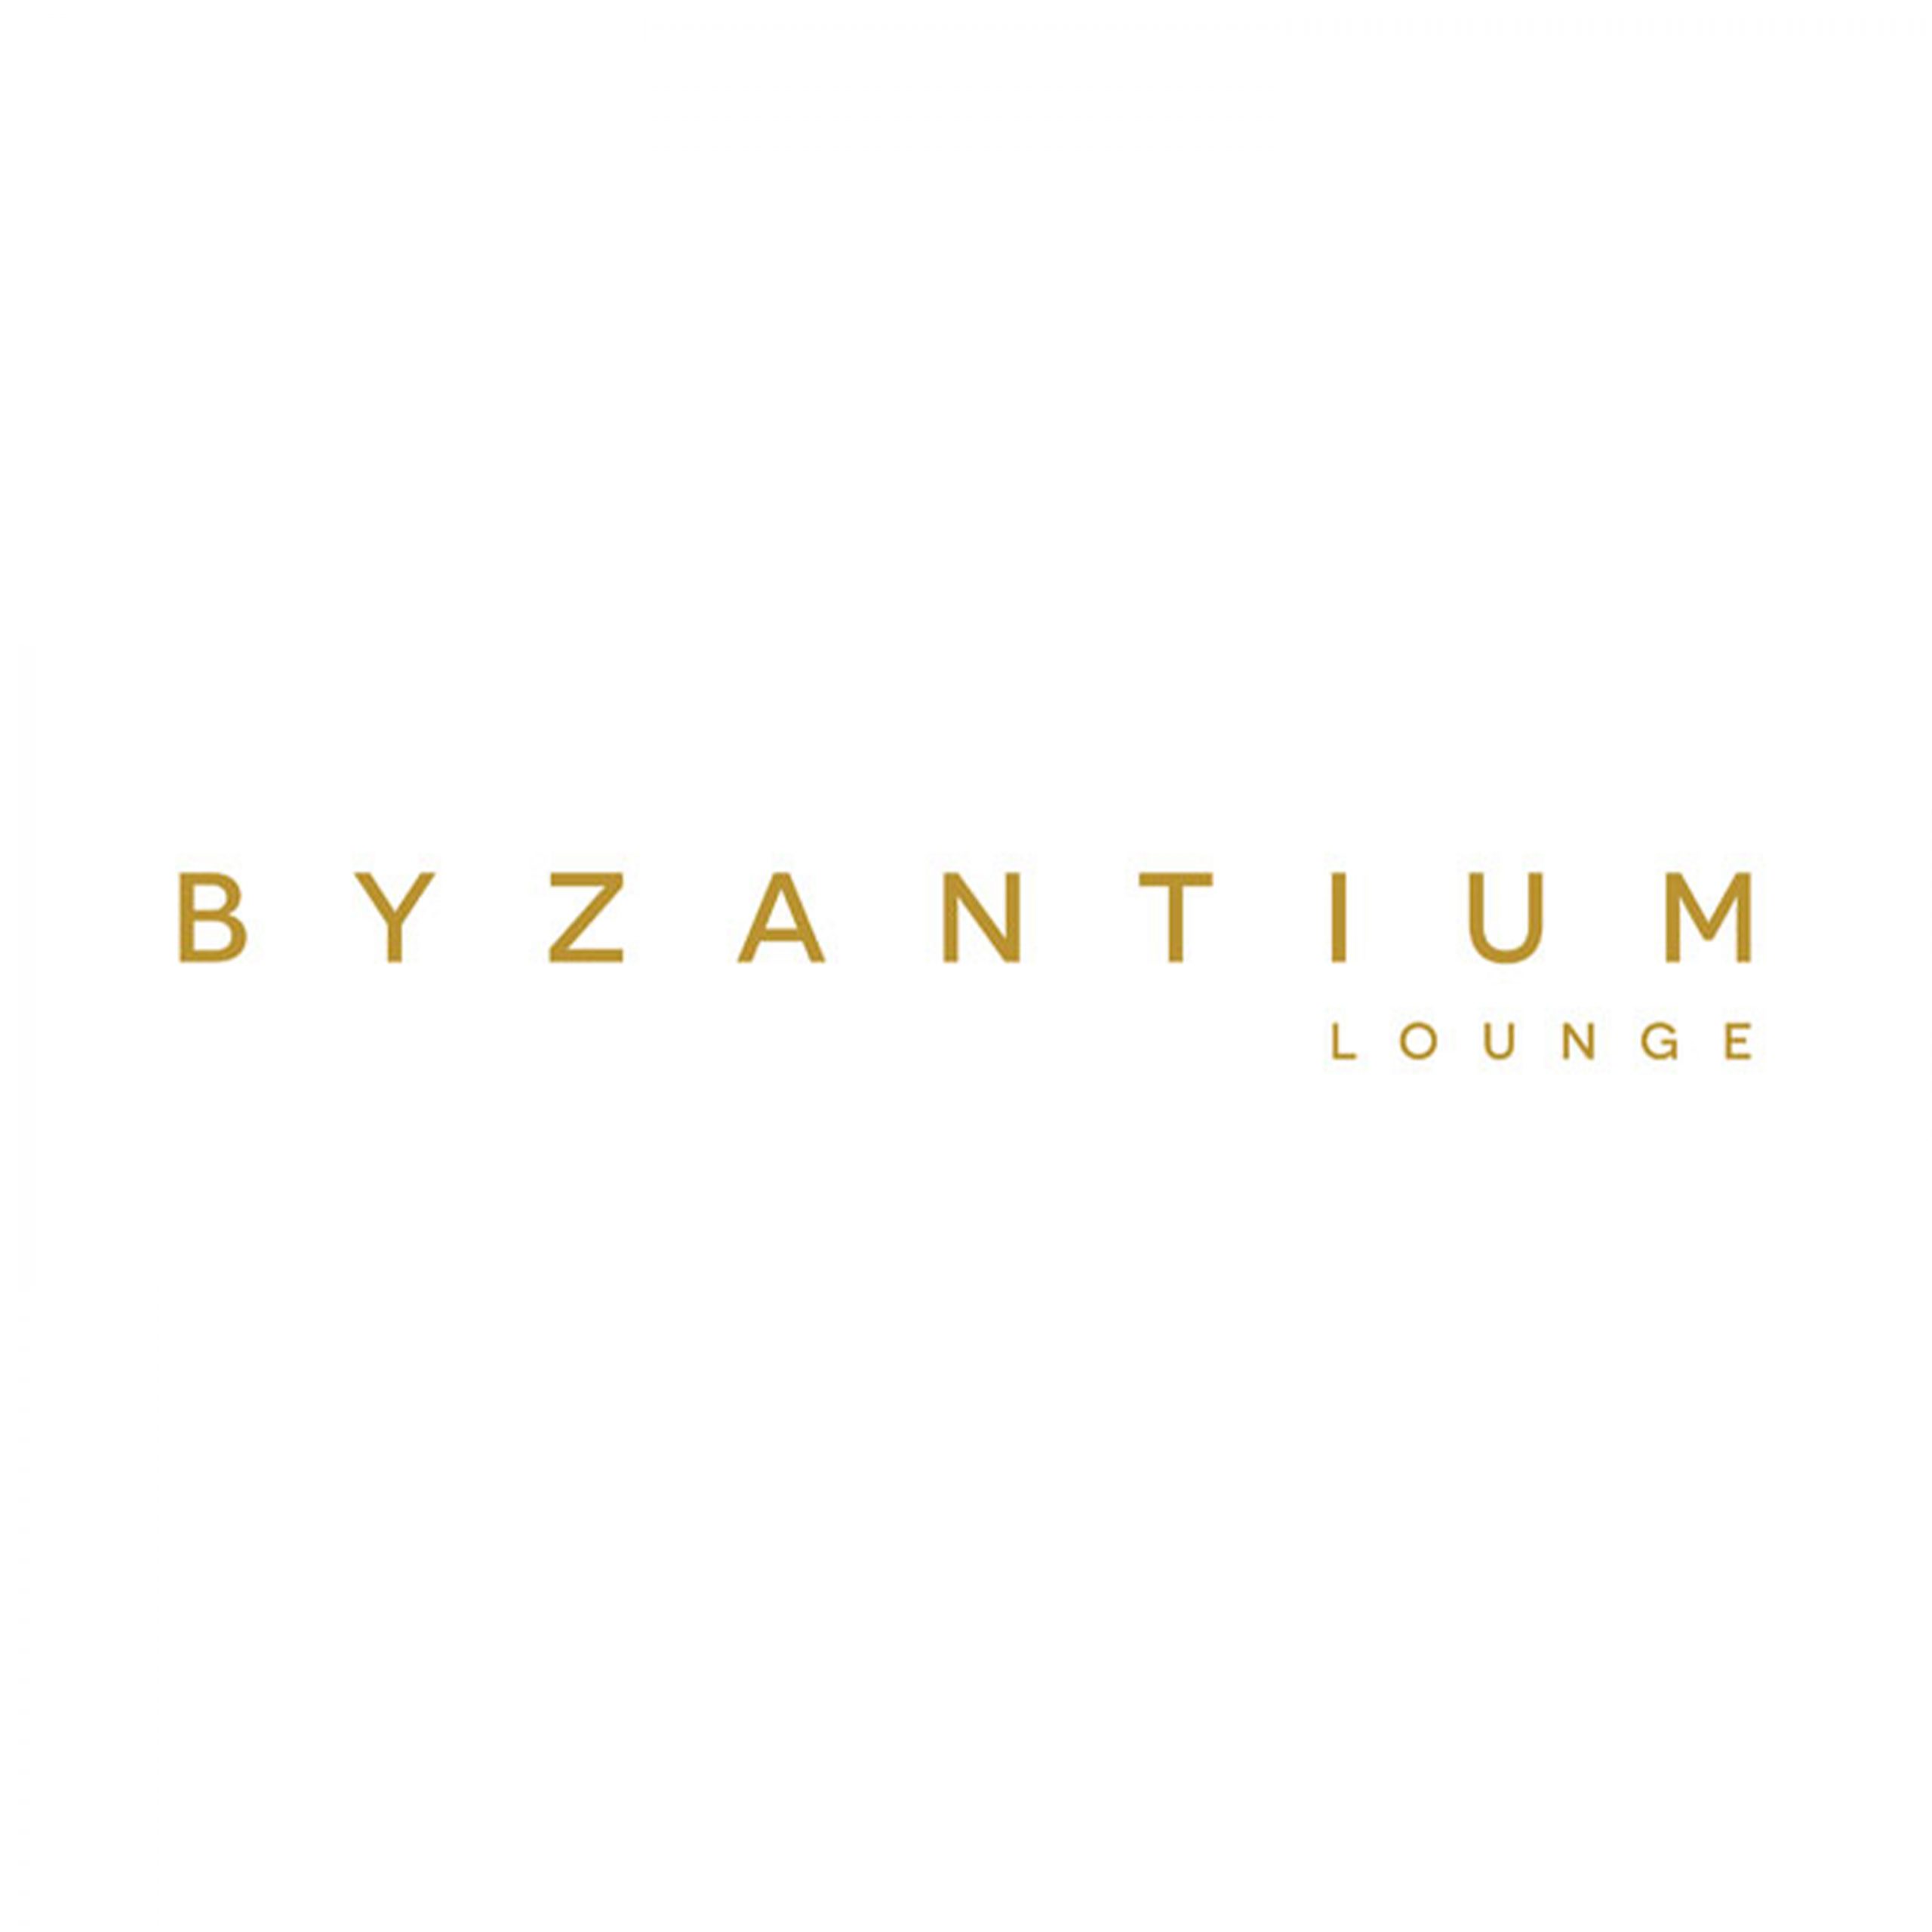 Byzantium Lounge - Coming Soon in UAE